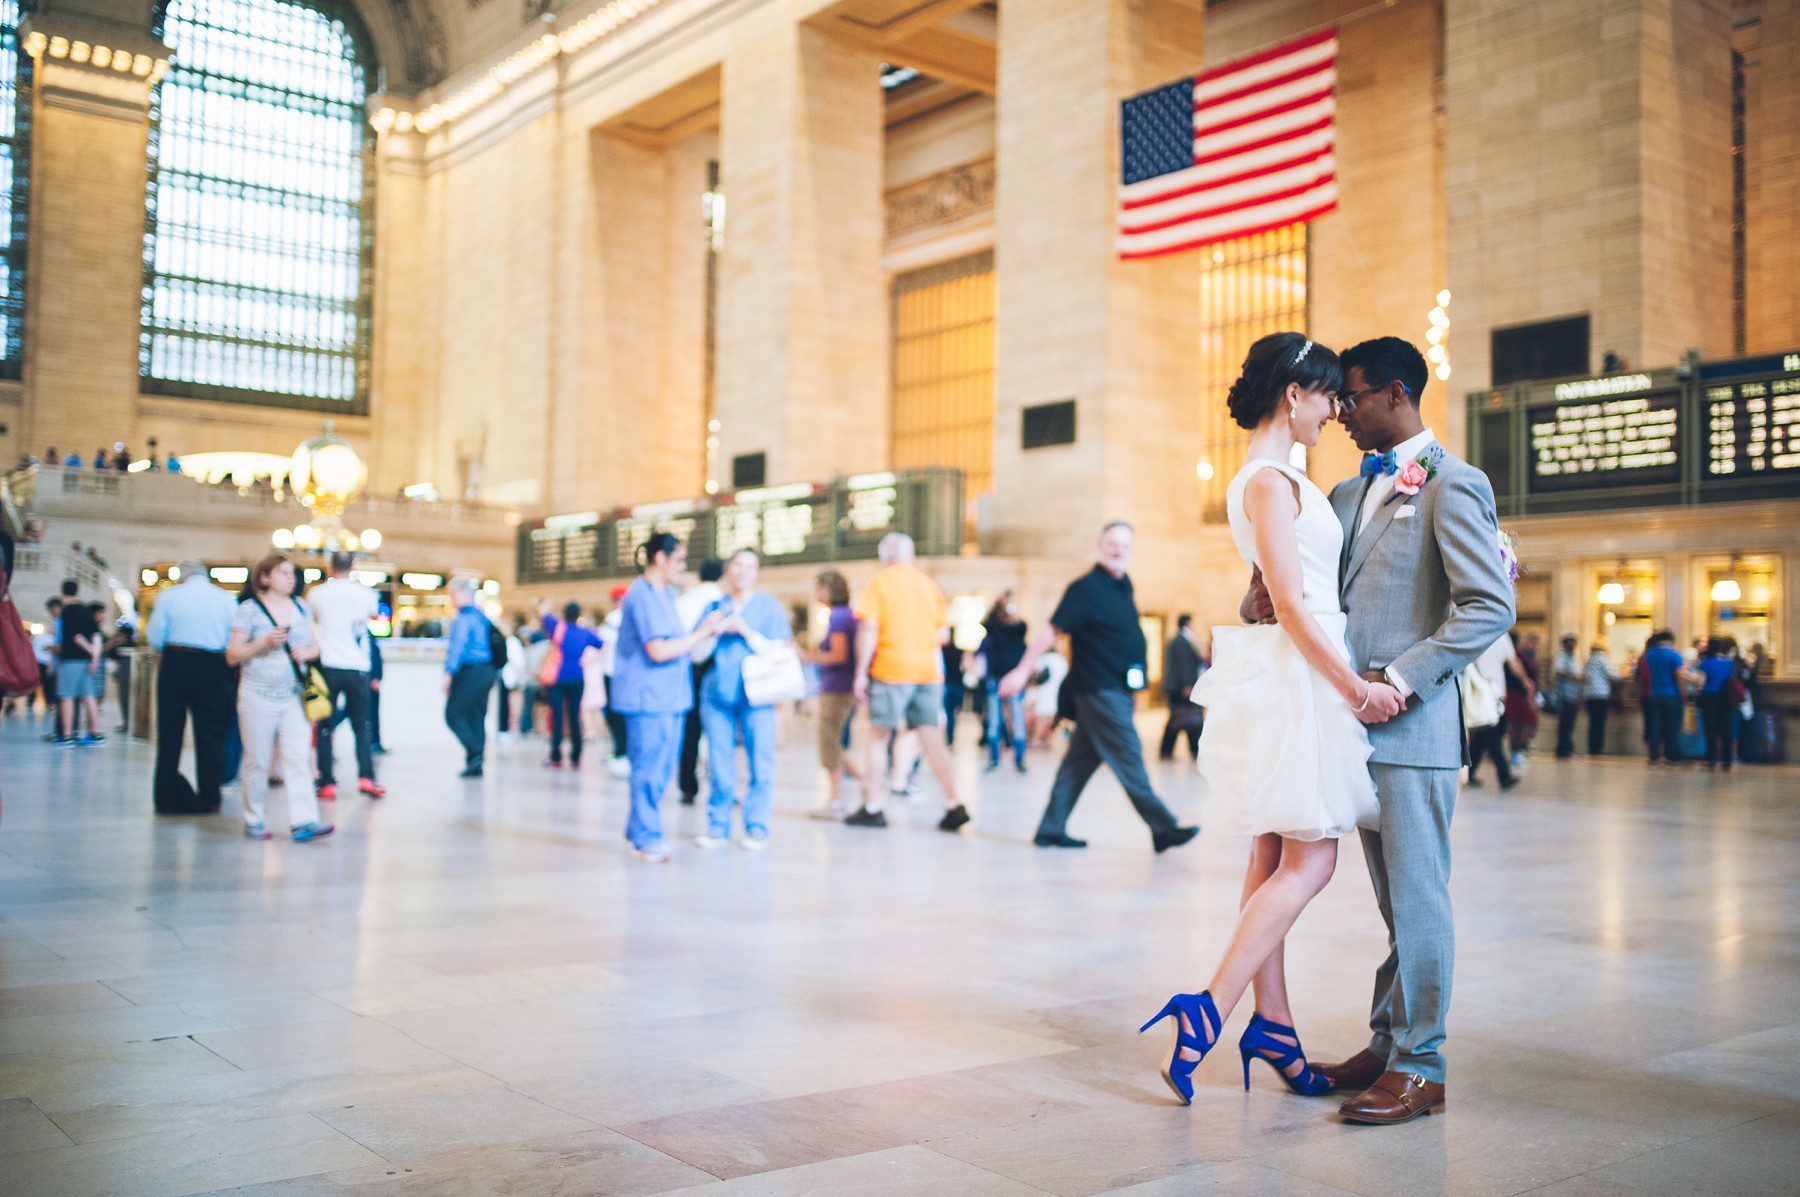 Grand Central wedding